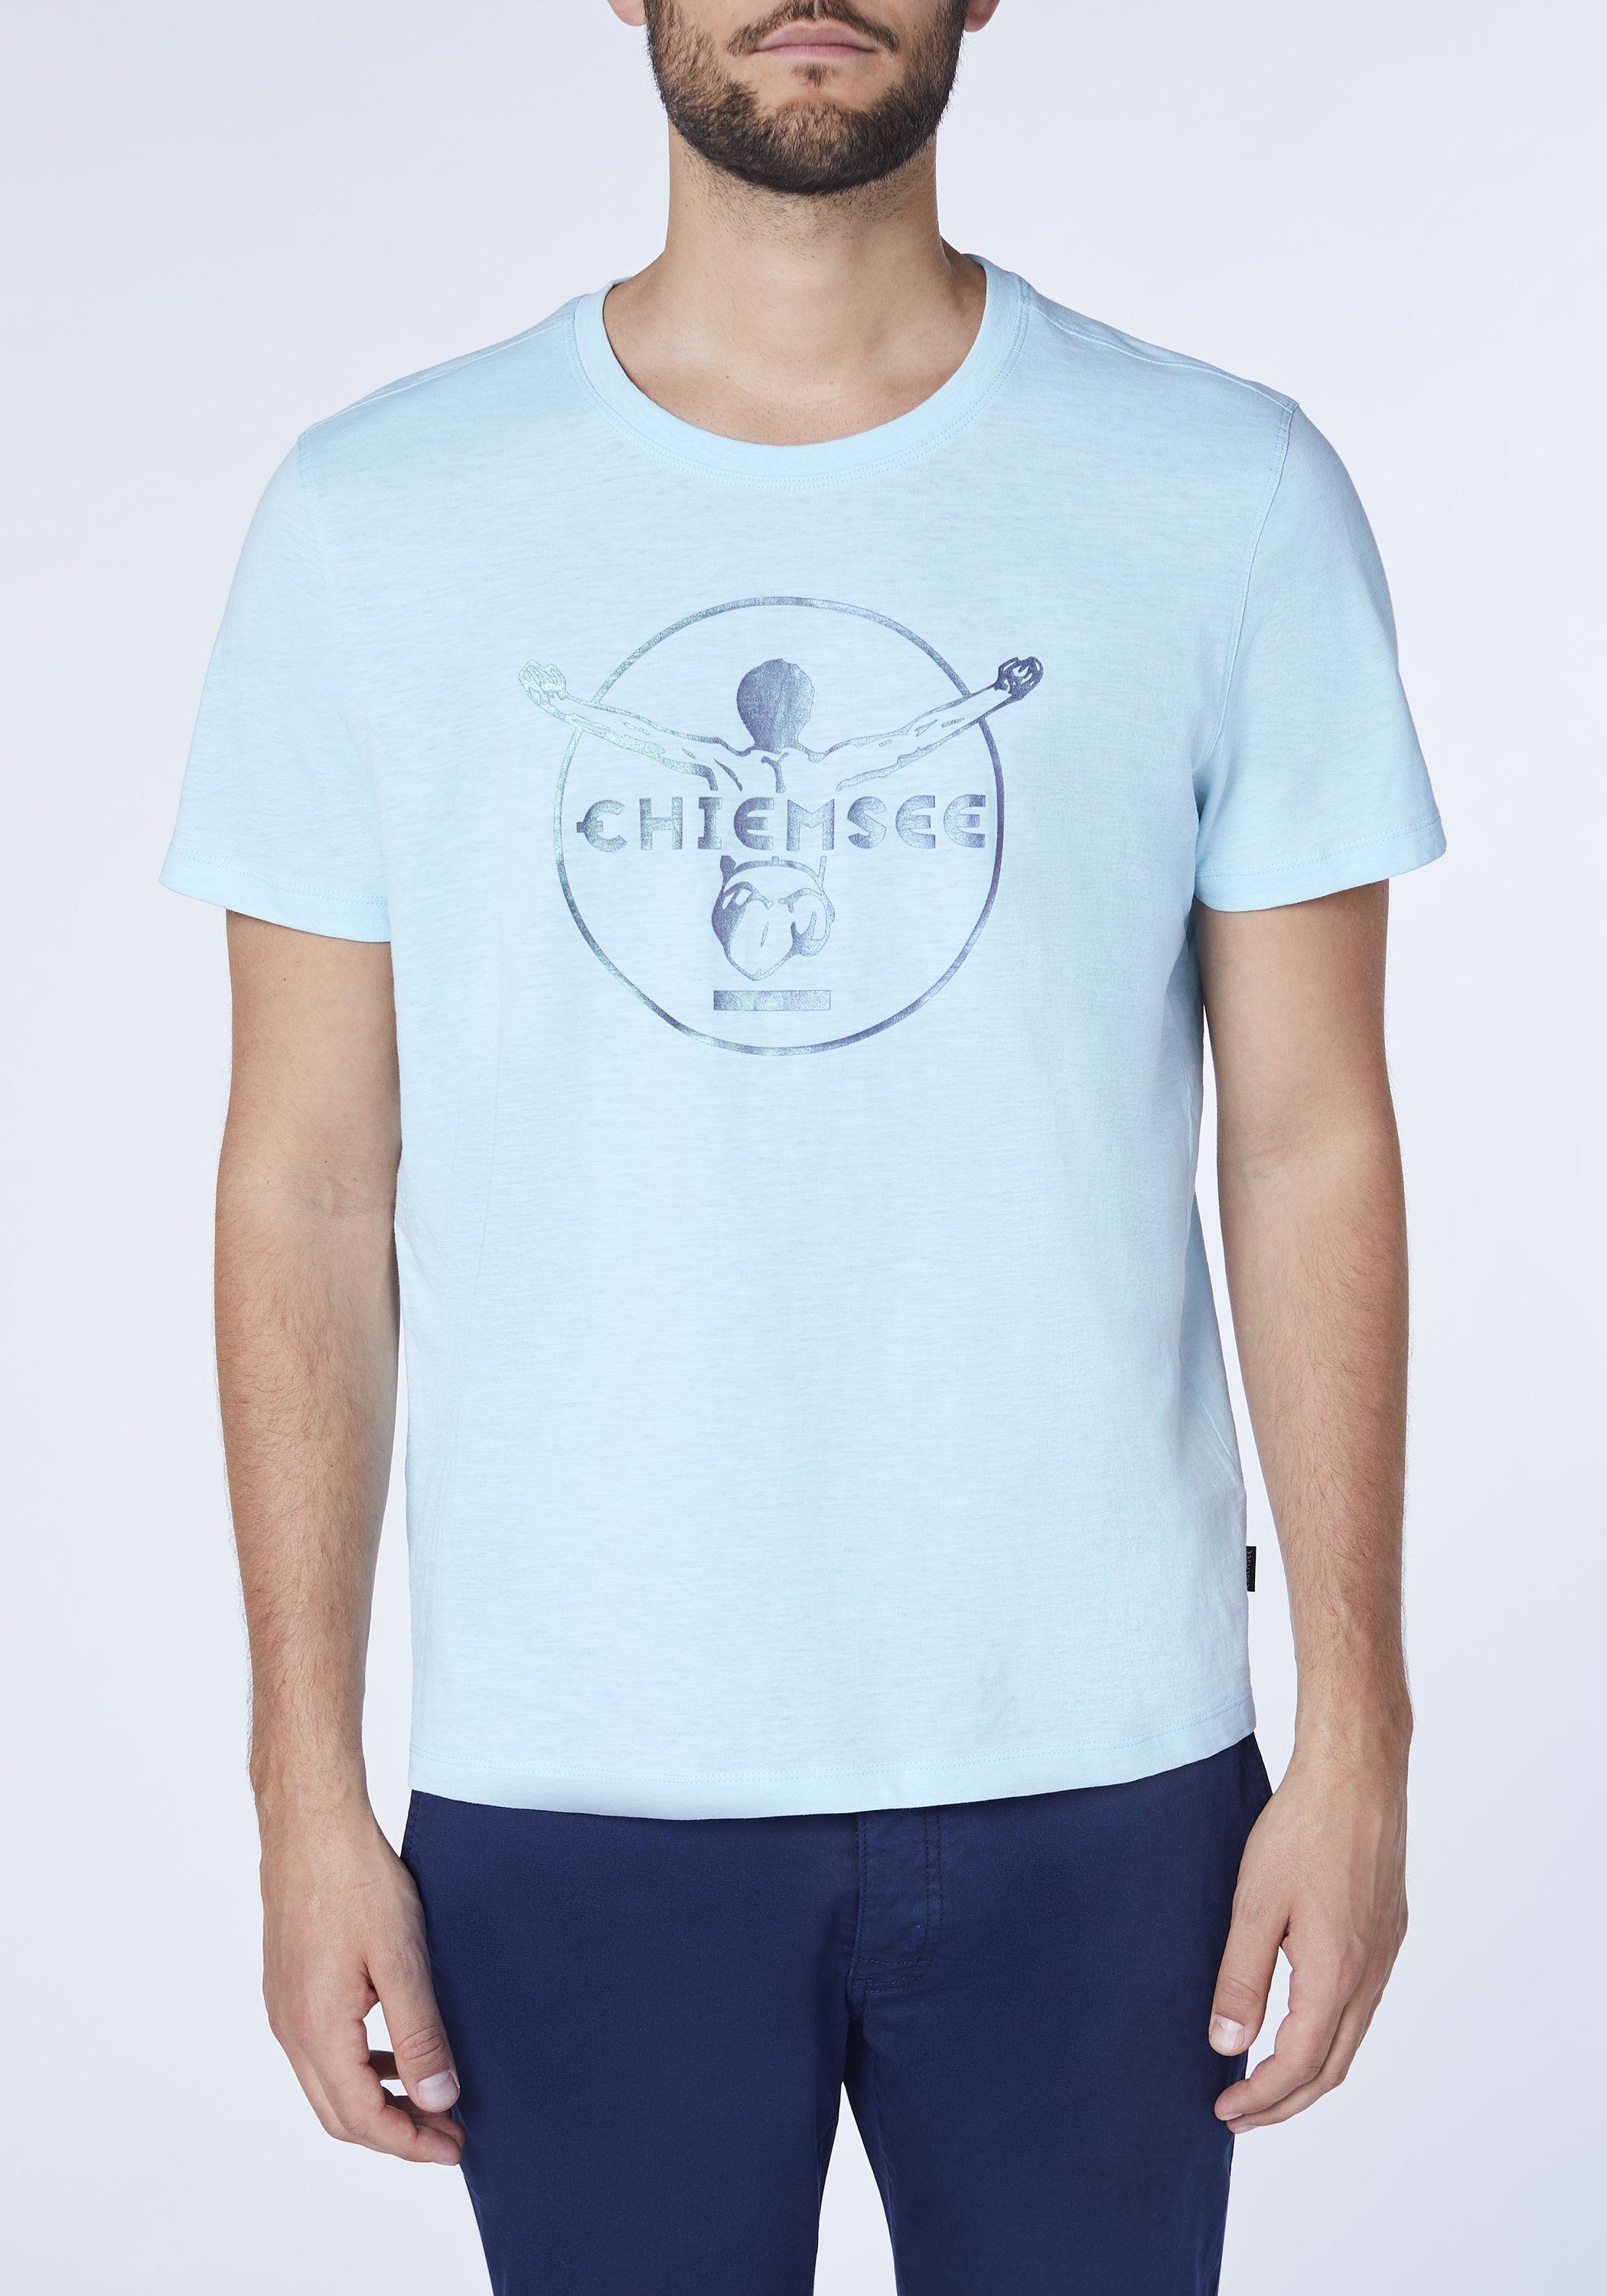 1 gedrucktem T-Shirt Label-Symbol Blue Chiemsee mit Coryda Print-Shirt